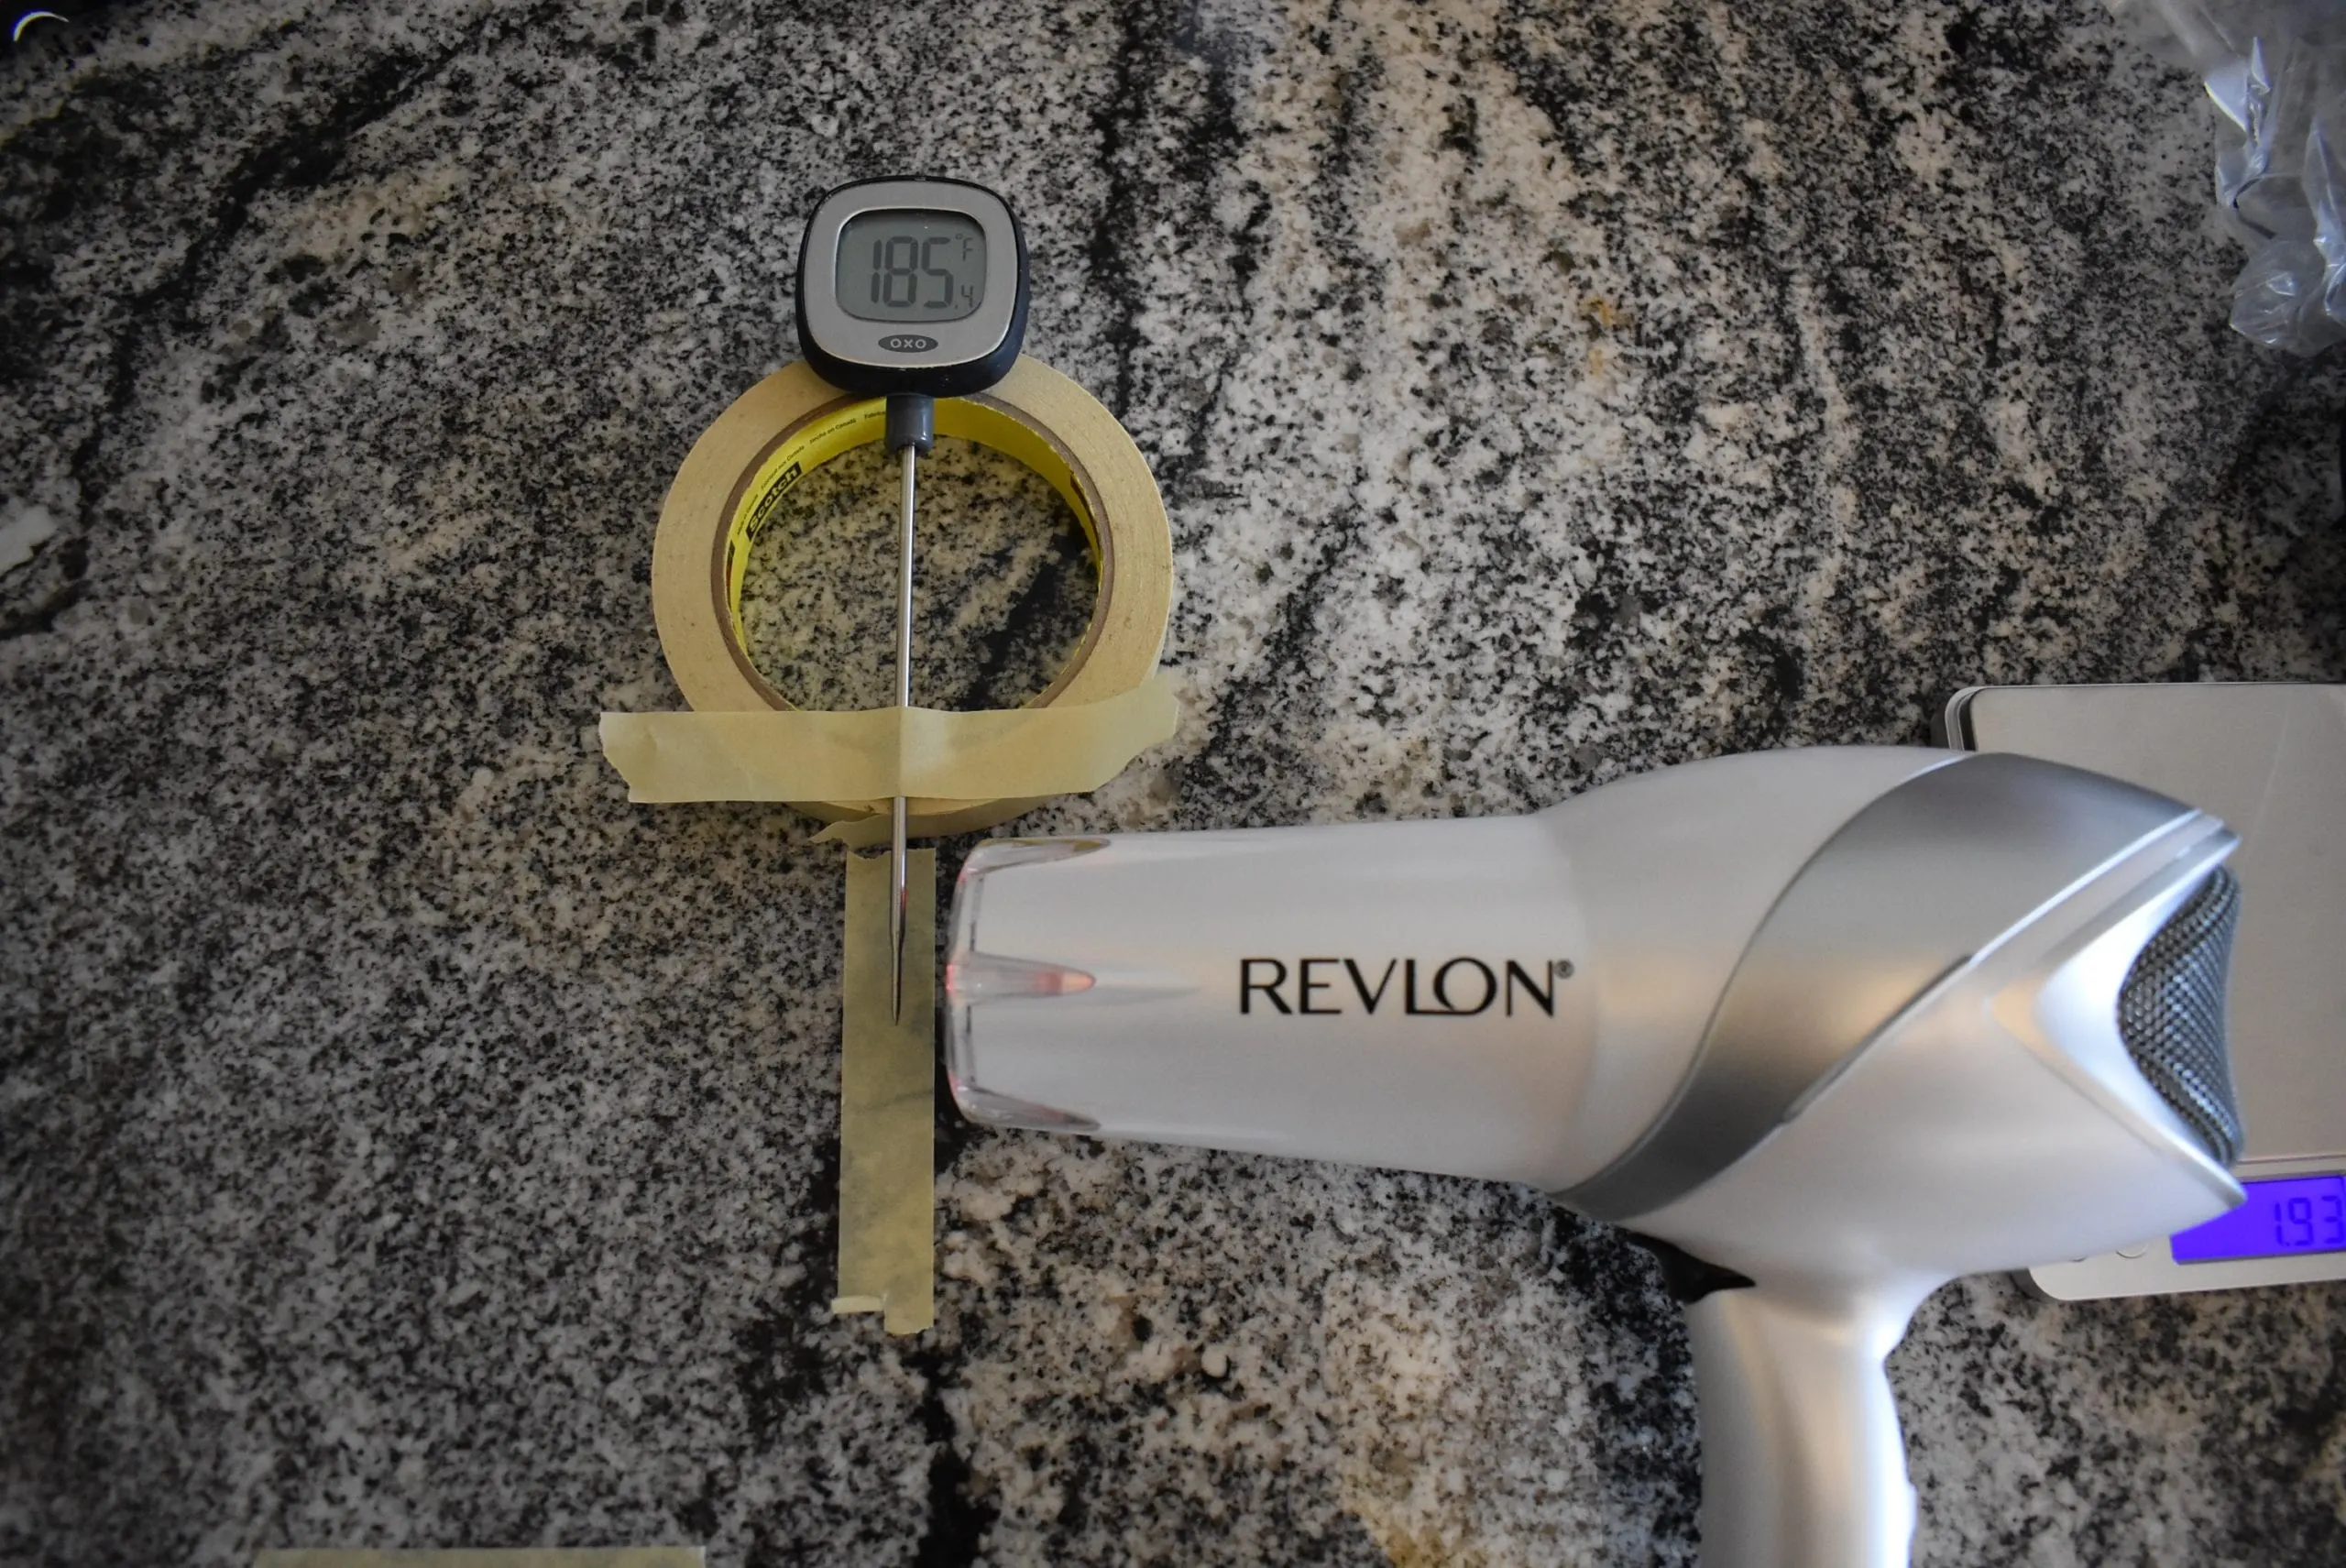 The Revlon 1875 watt hair dryer registering 185 degrees farenheit on a kitchen thermometer